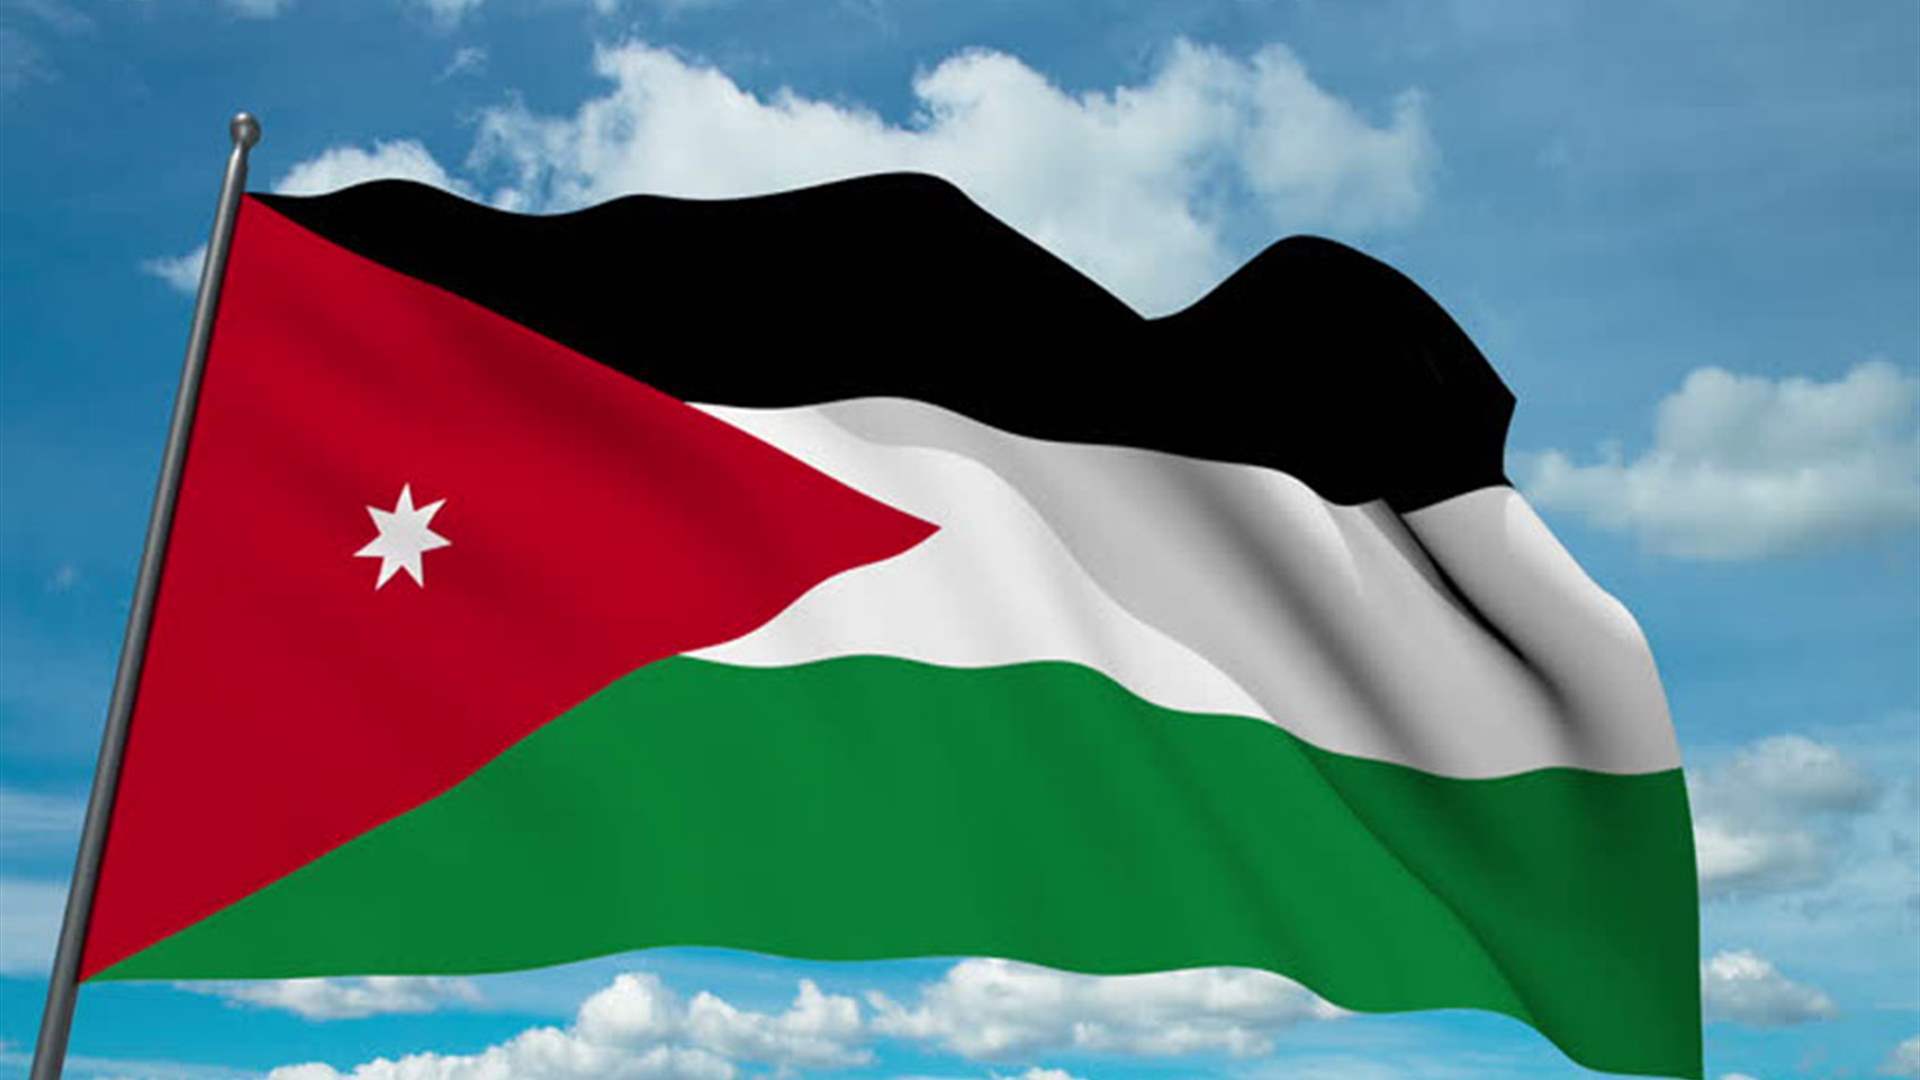 Jordan advises citizens to avoid traveling to Lebanon amid regional concerns